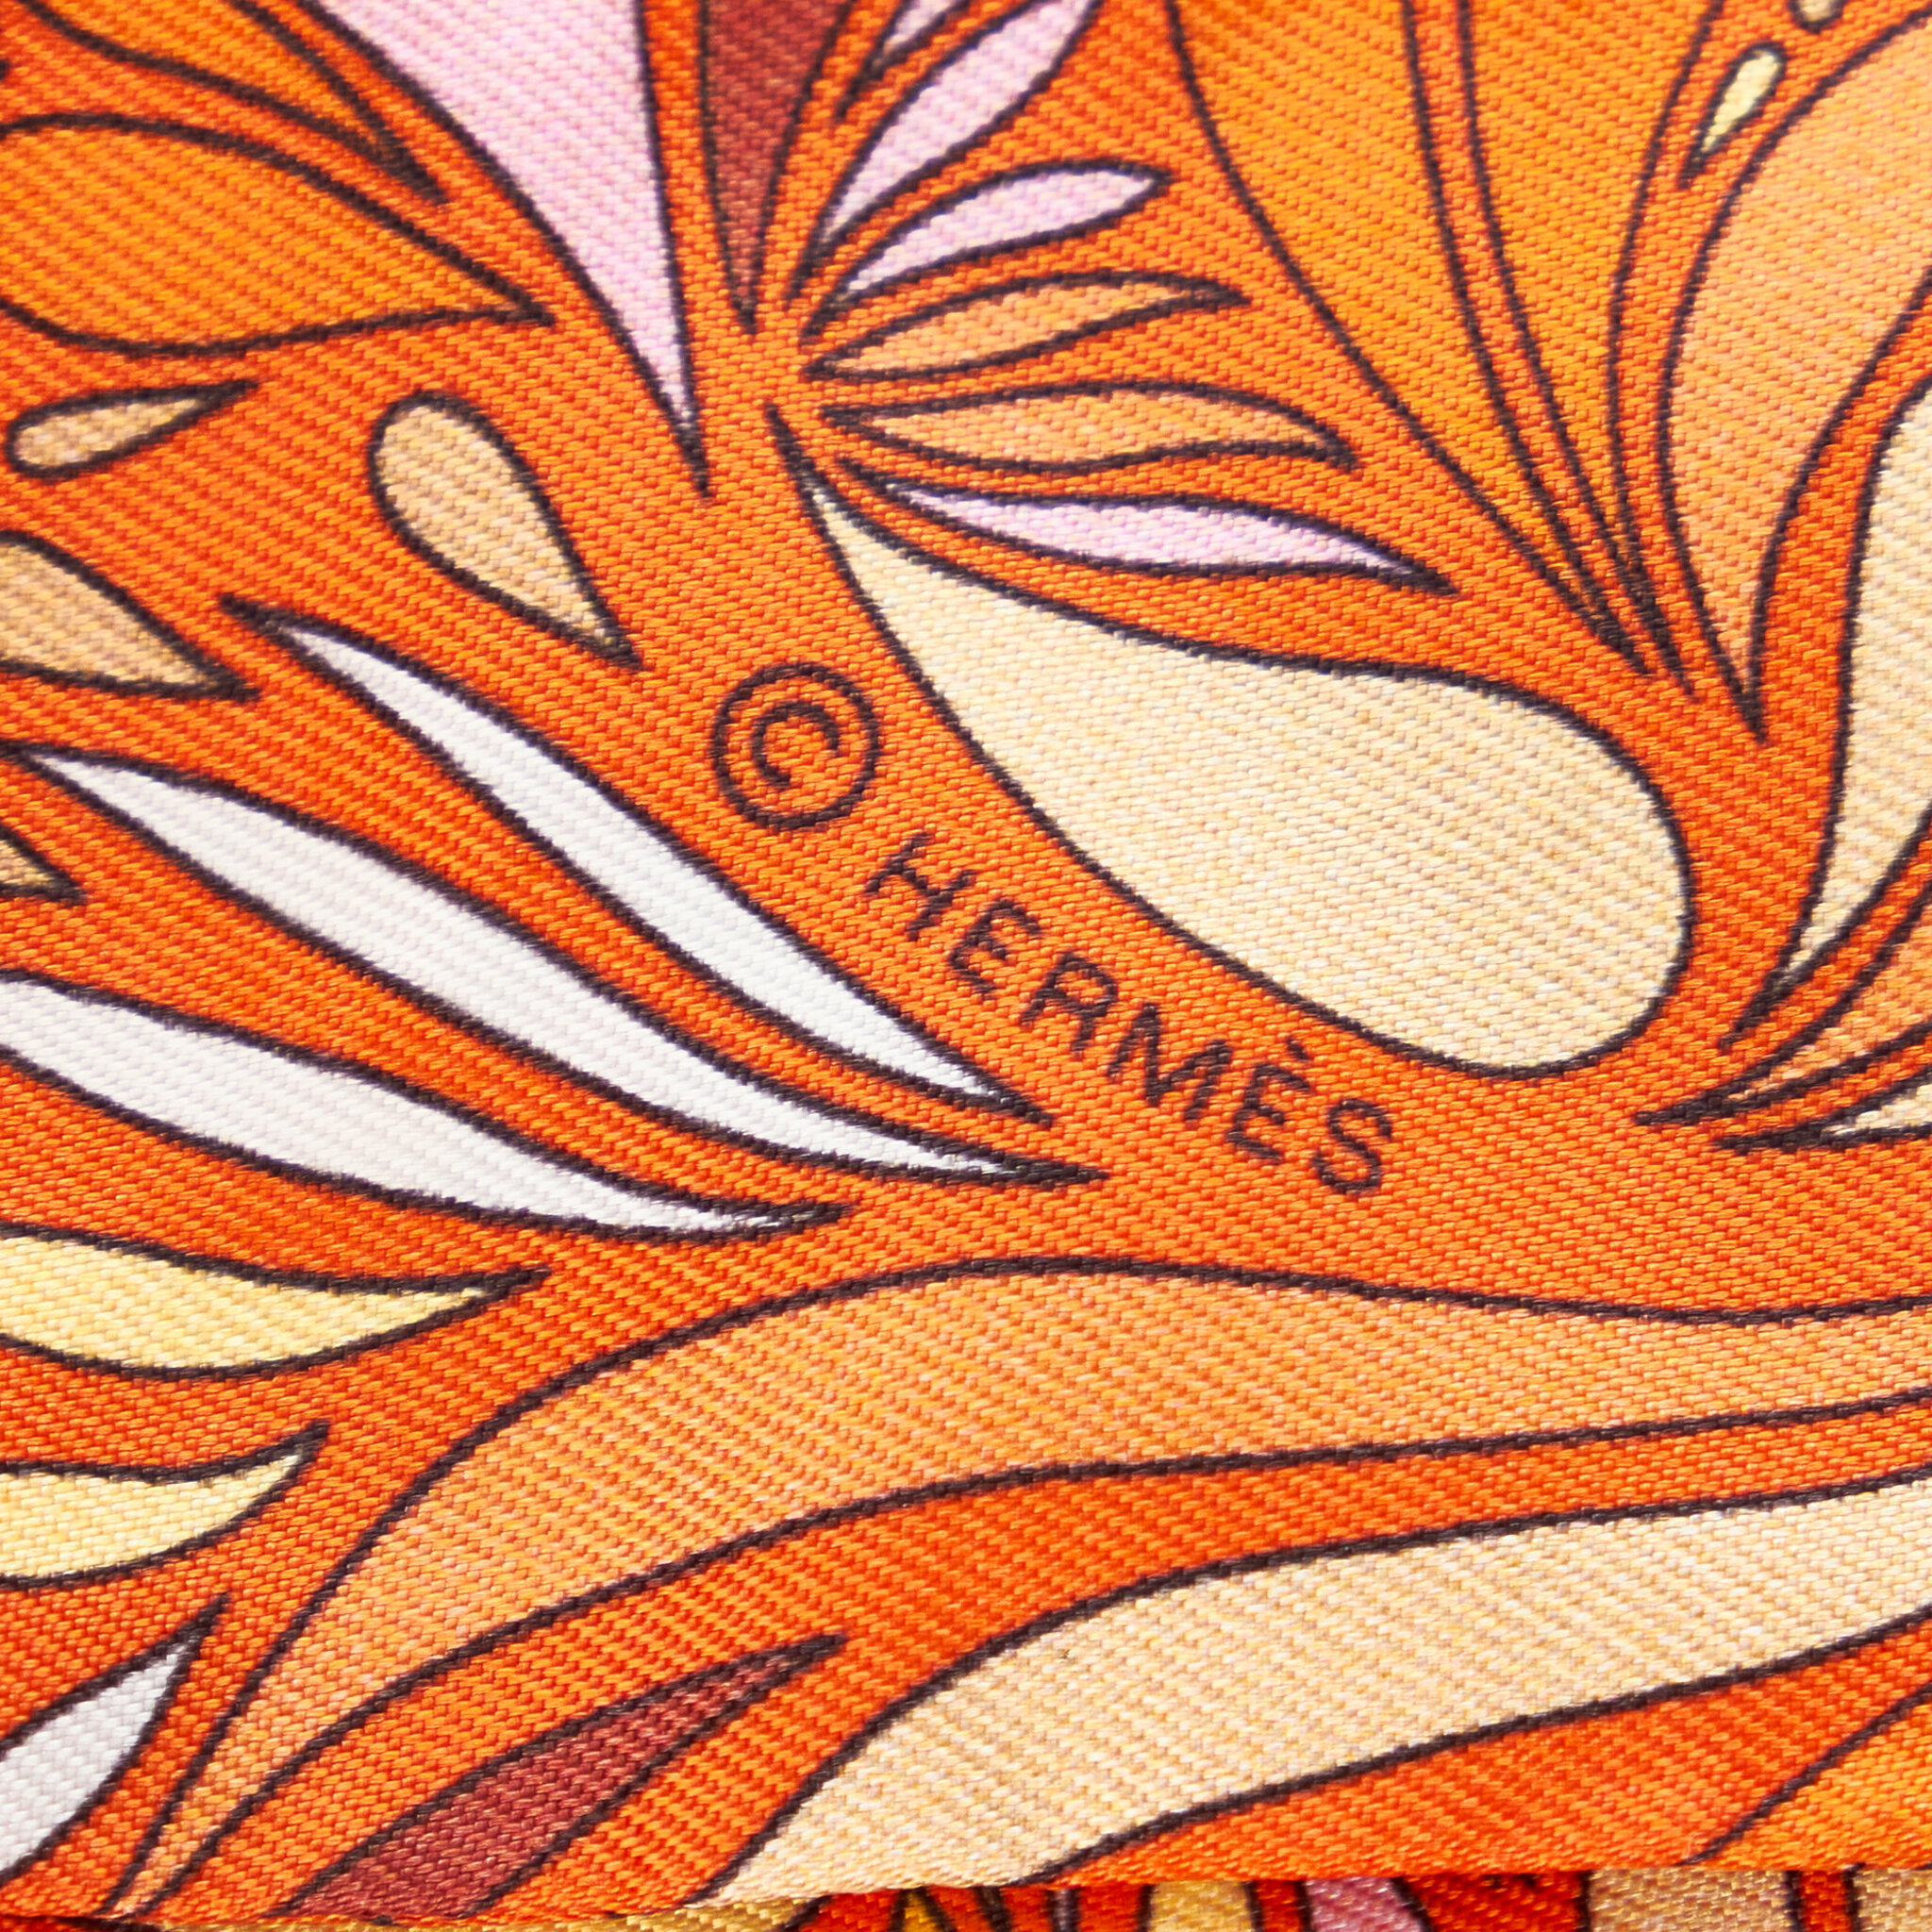 Hermes Printed Twilly Silk Scarf, ONESIZE, orange